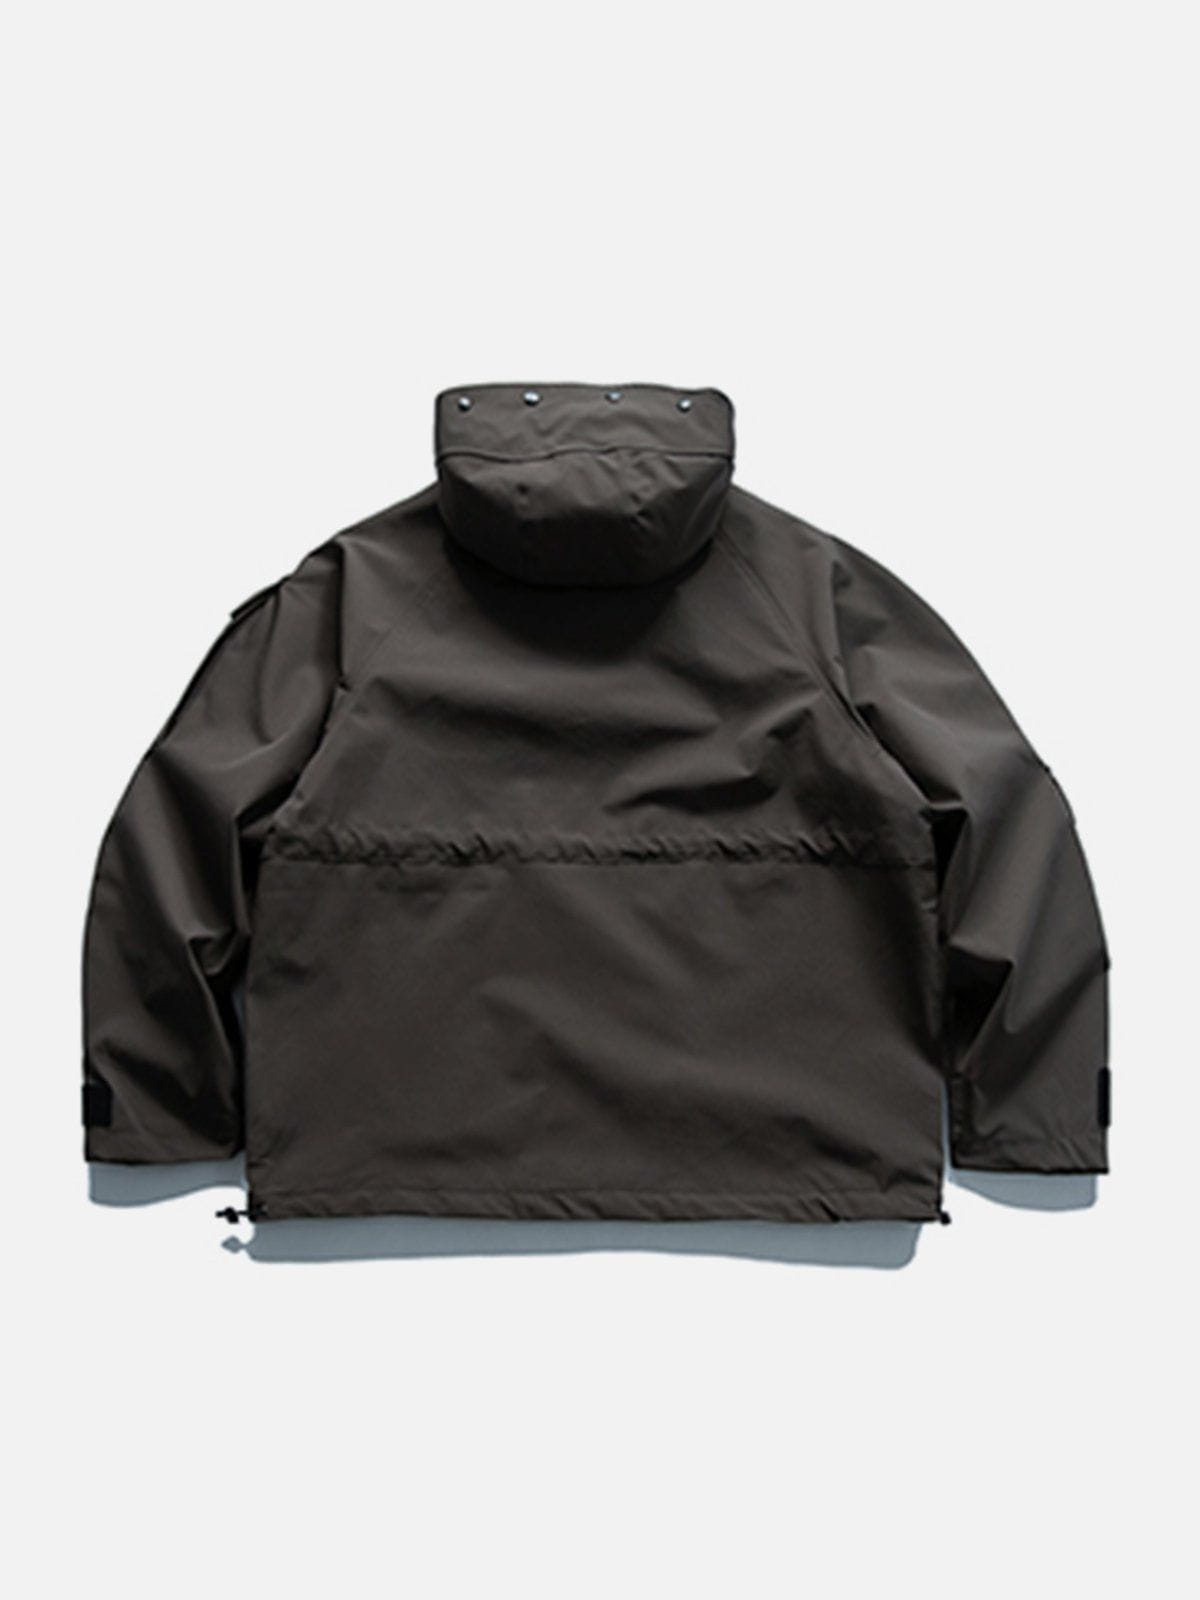 LUXENFY™ - Multi Pockets Hooded Winter Coat luxenfy.com